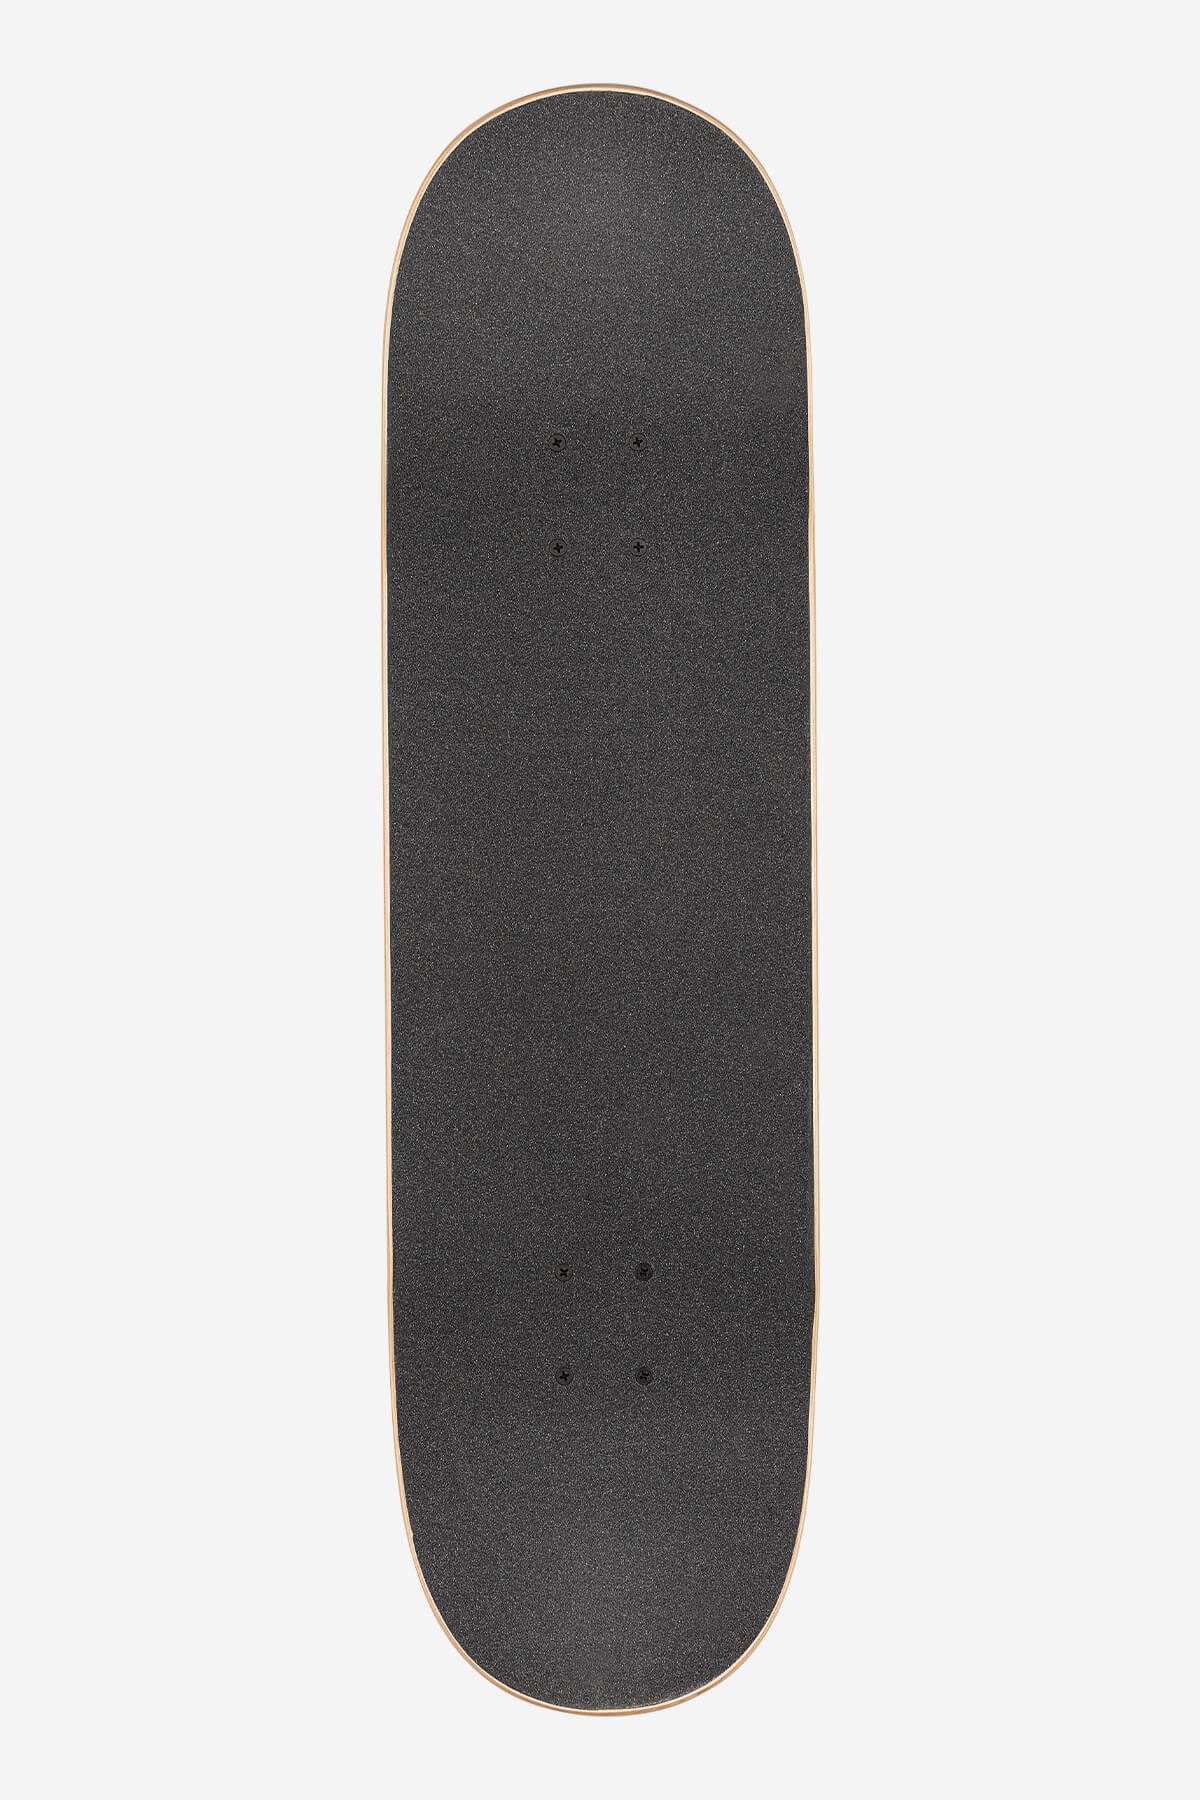 Globe - G1 Stack - Lone Palm - 8.0" complet Skateboard